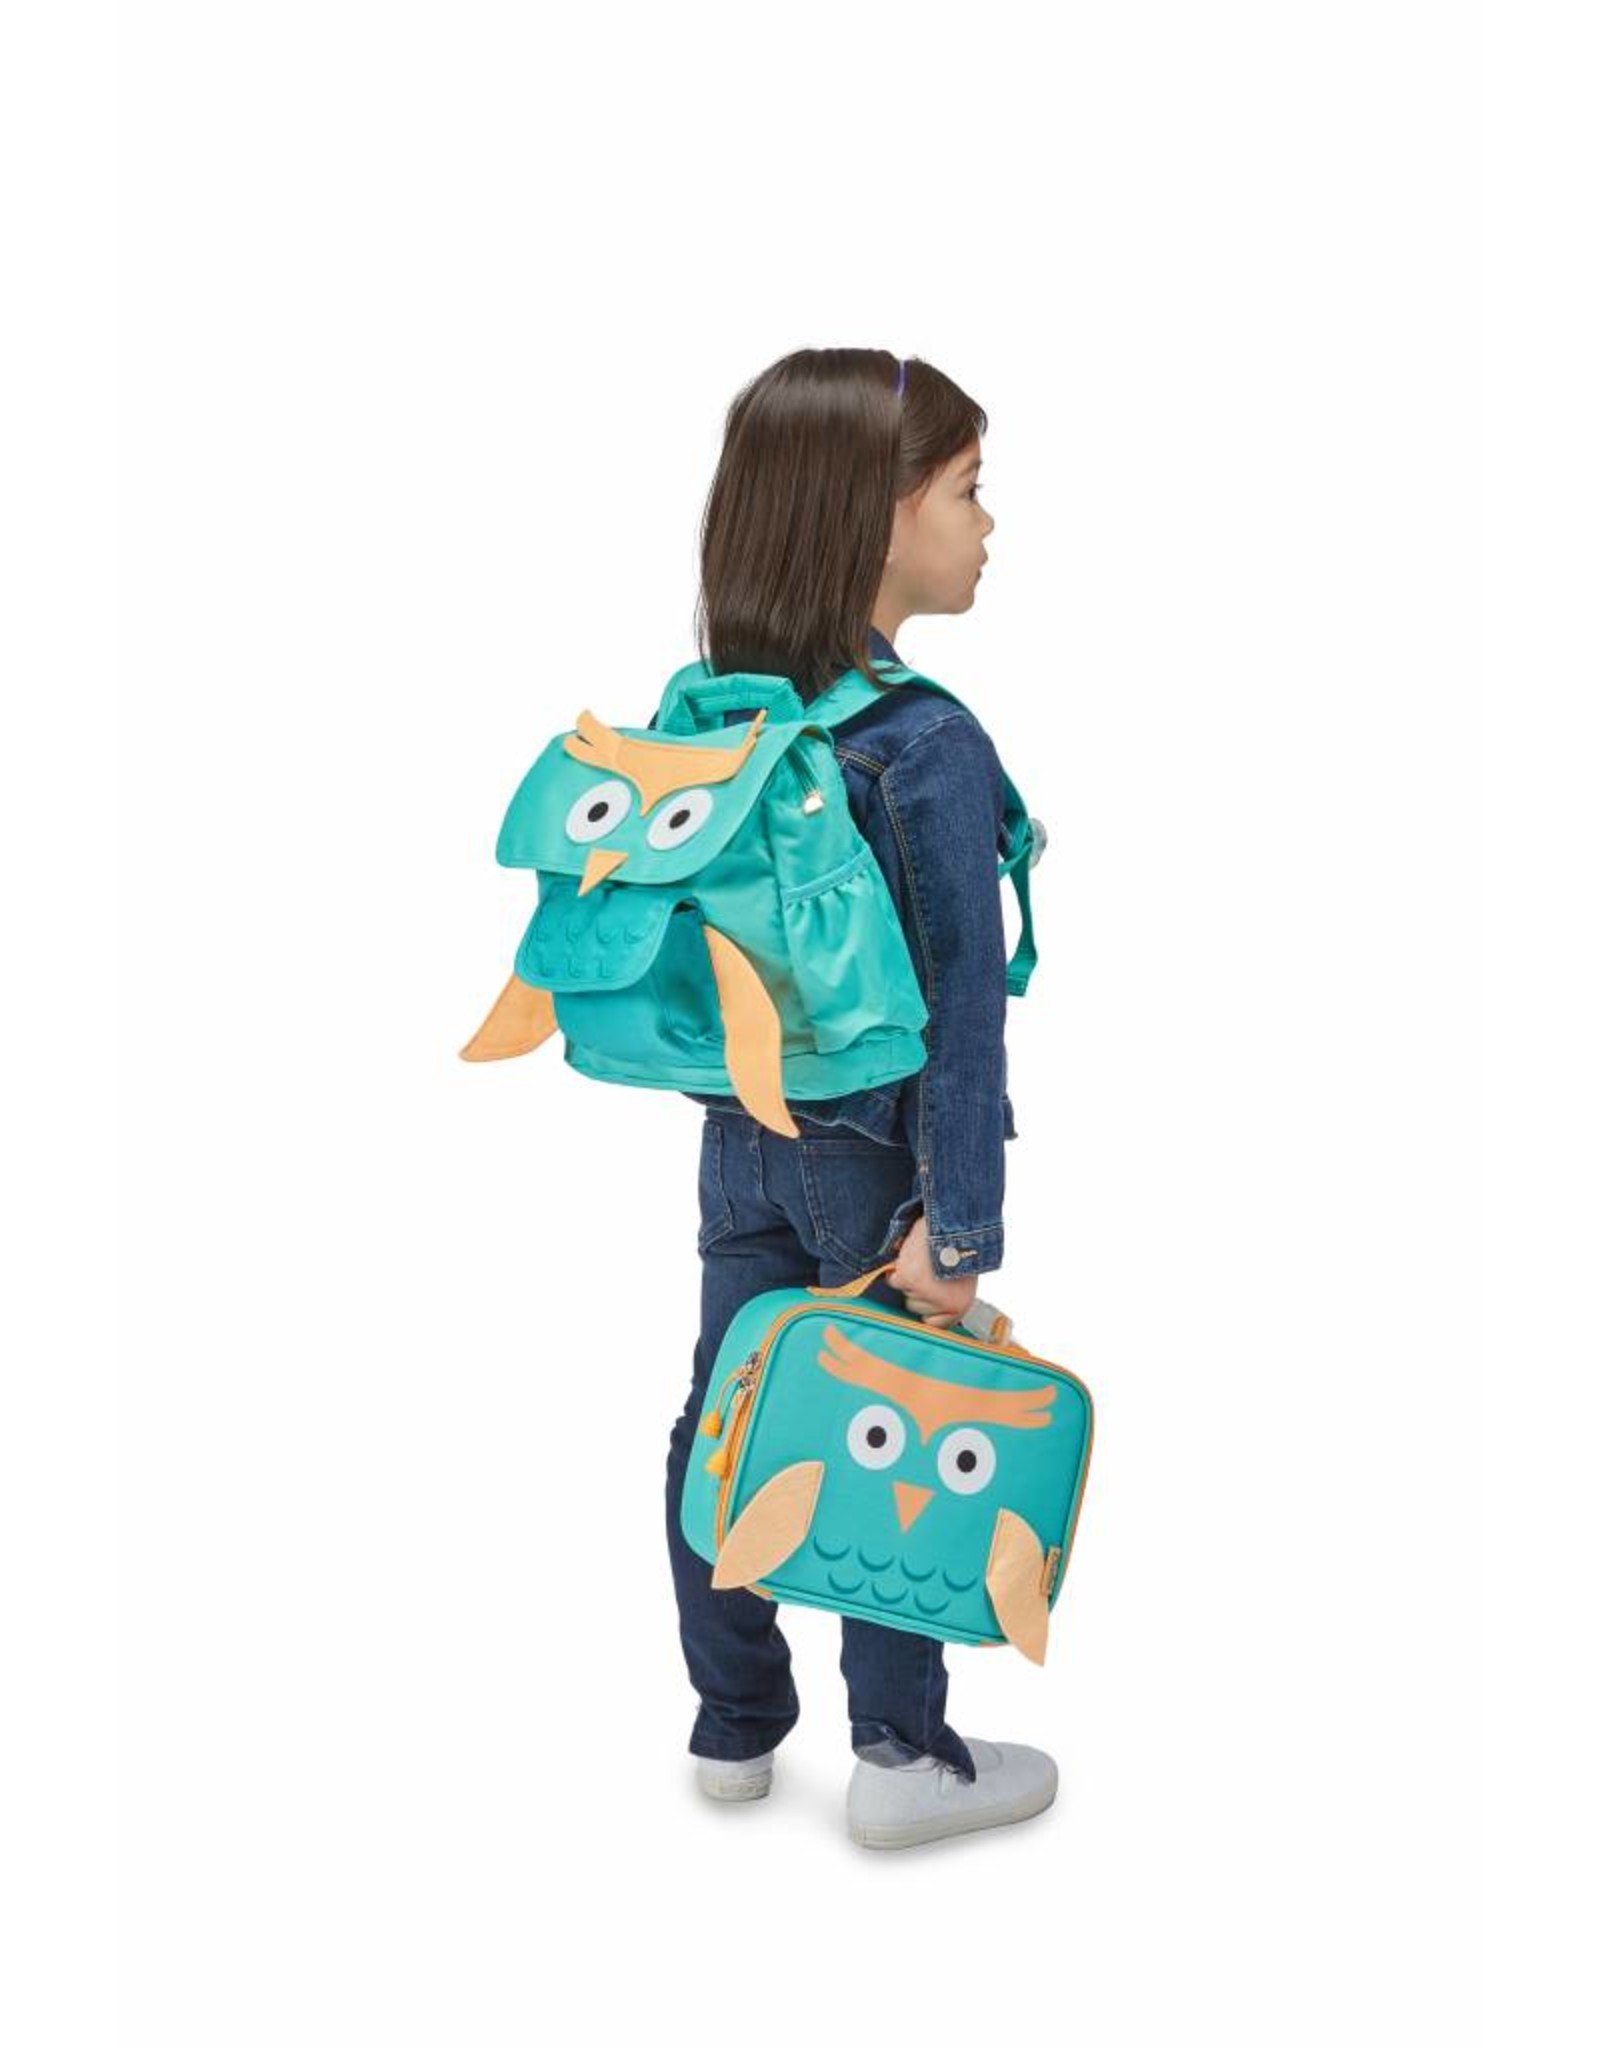 Bixbee Owl Pack (Small)